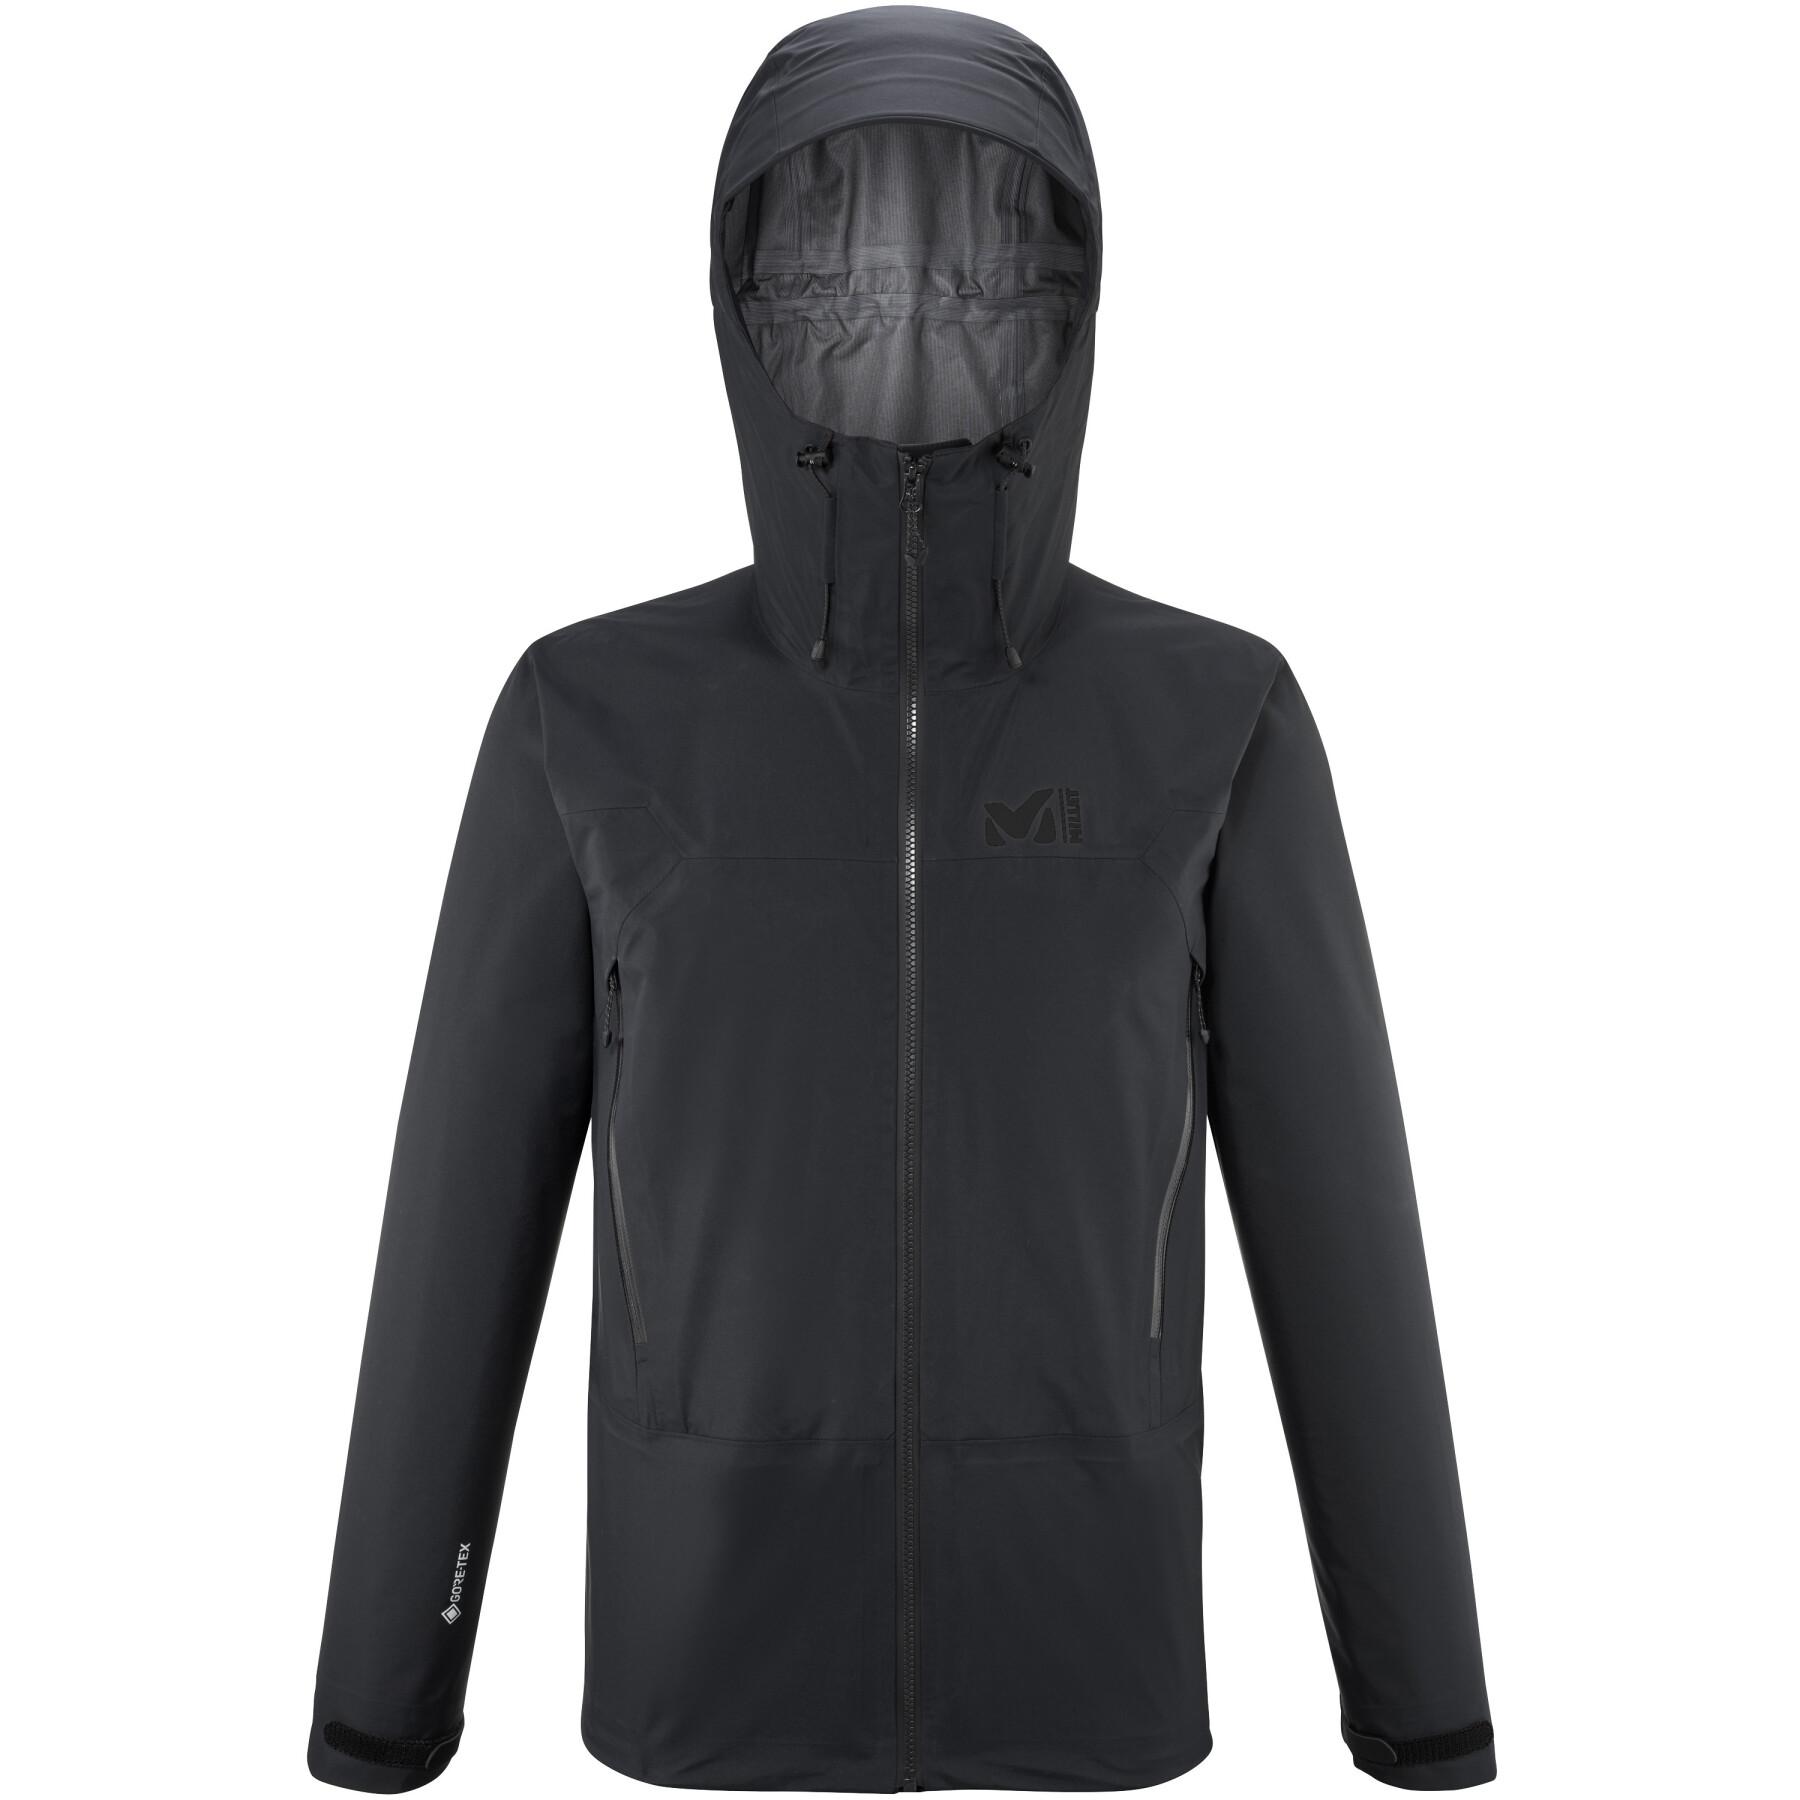 Jacket Millet Kamet Light GTX - Softshell jackets - Men's clothing ...